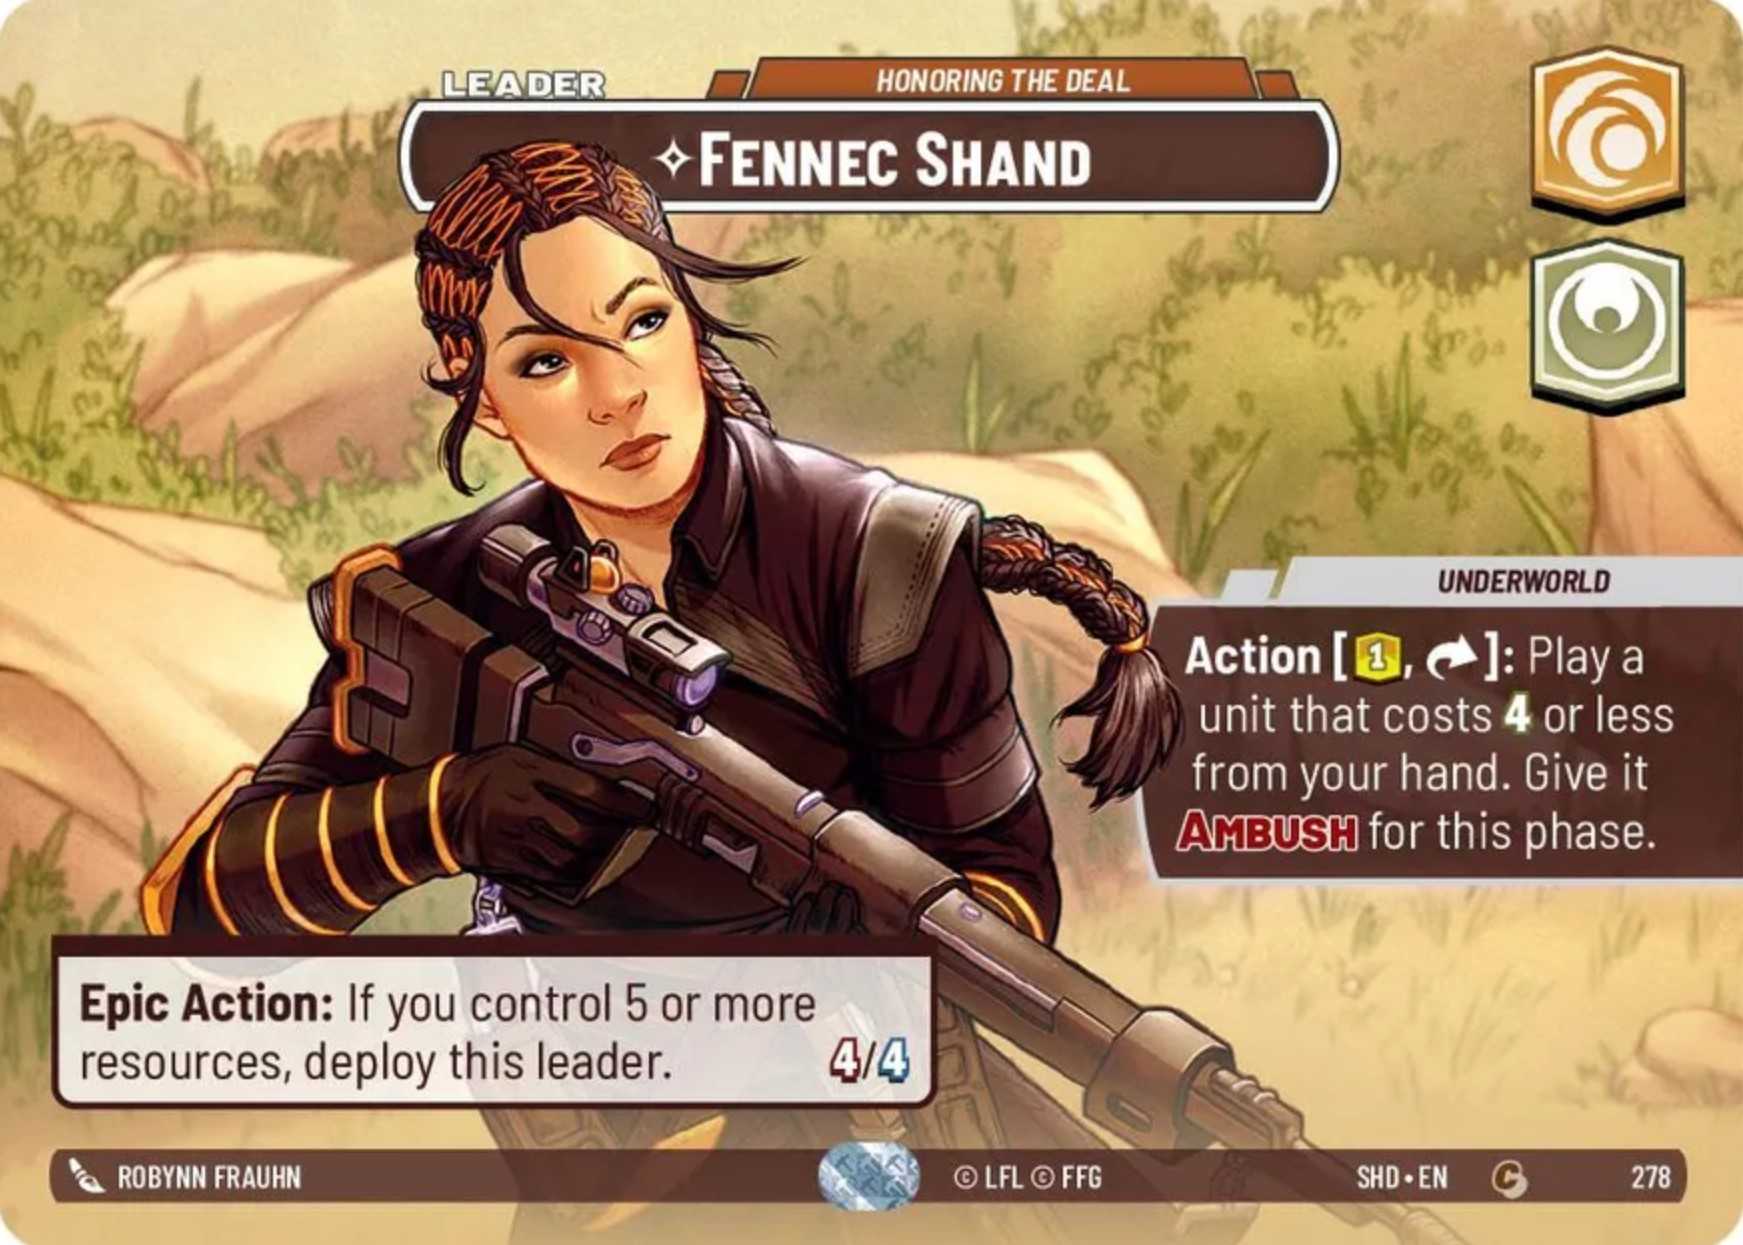 Fennec Shand Showcase card in Star Wars Unlimited